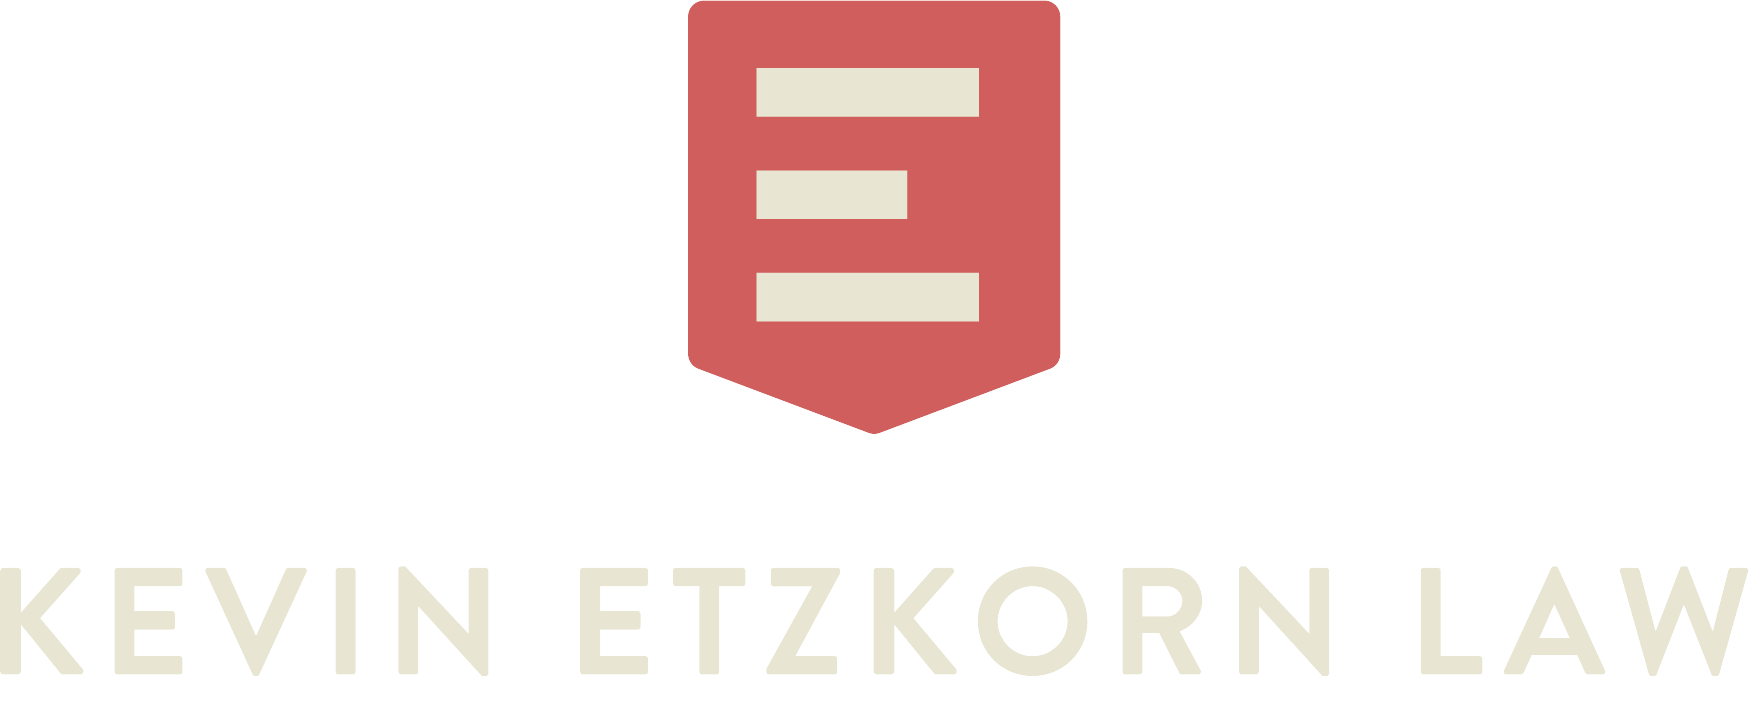 etzkorn logo-primary-reverse-type-RGB - Cropped 2